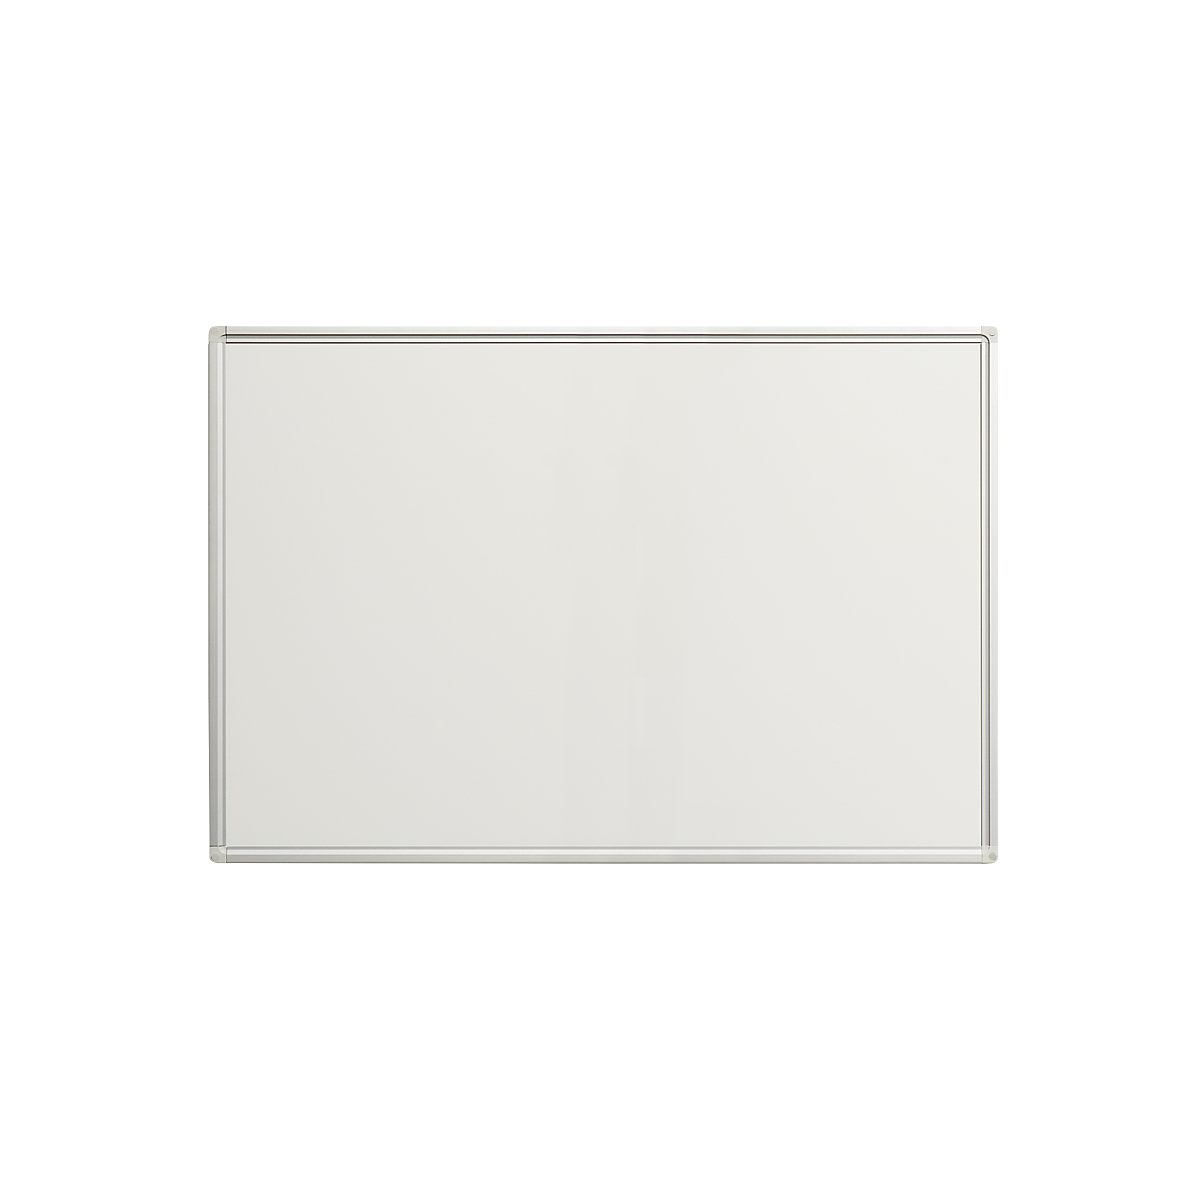 EUROKRAFTpro Whiteboard Economy, Stahlblech, lackiert, BxH 900 x 600 mm